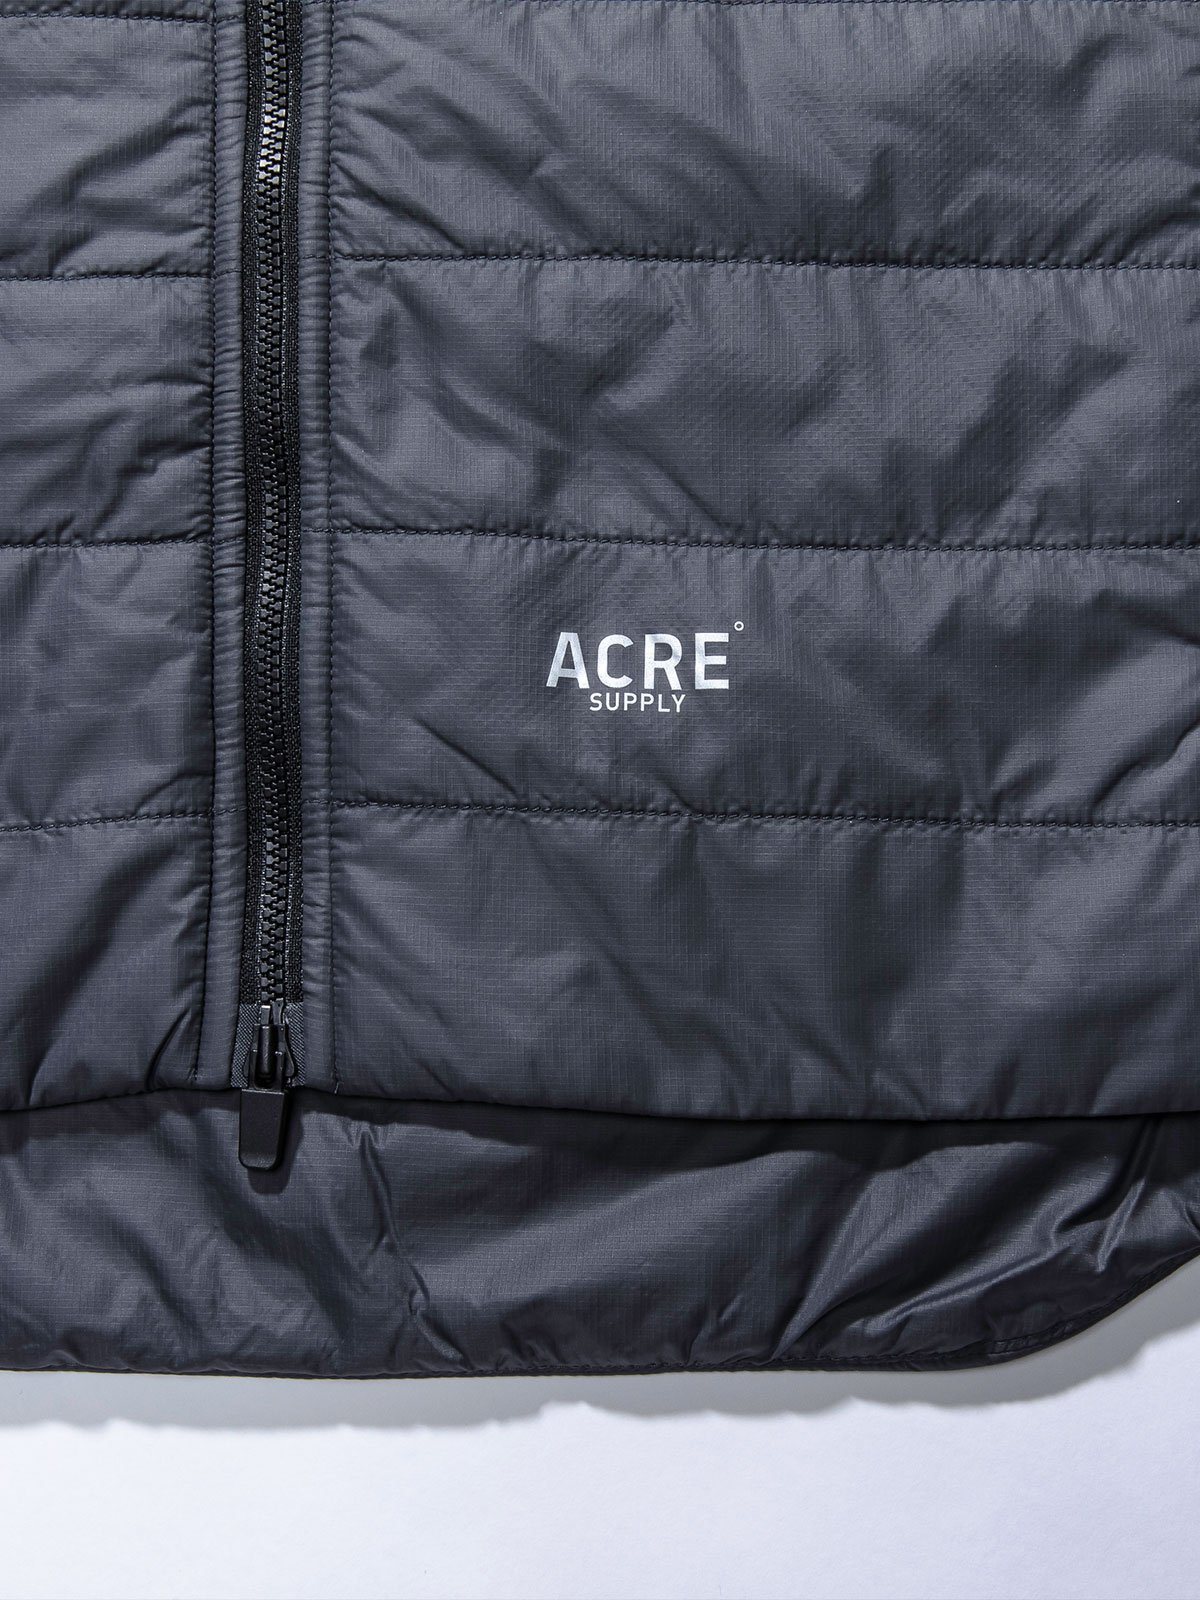 Acre Series Vest byMission Workshop - 耐候性バッグ＆テクニカルアパレル - サンフランシスコ＆ロサンゼルス - 耐久性に優れた作り - 永久保証